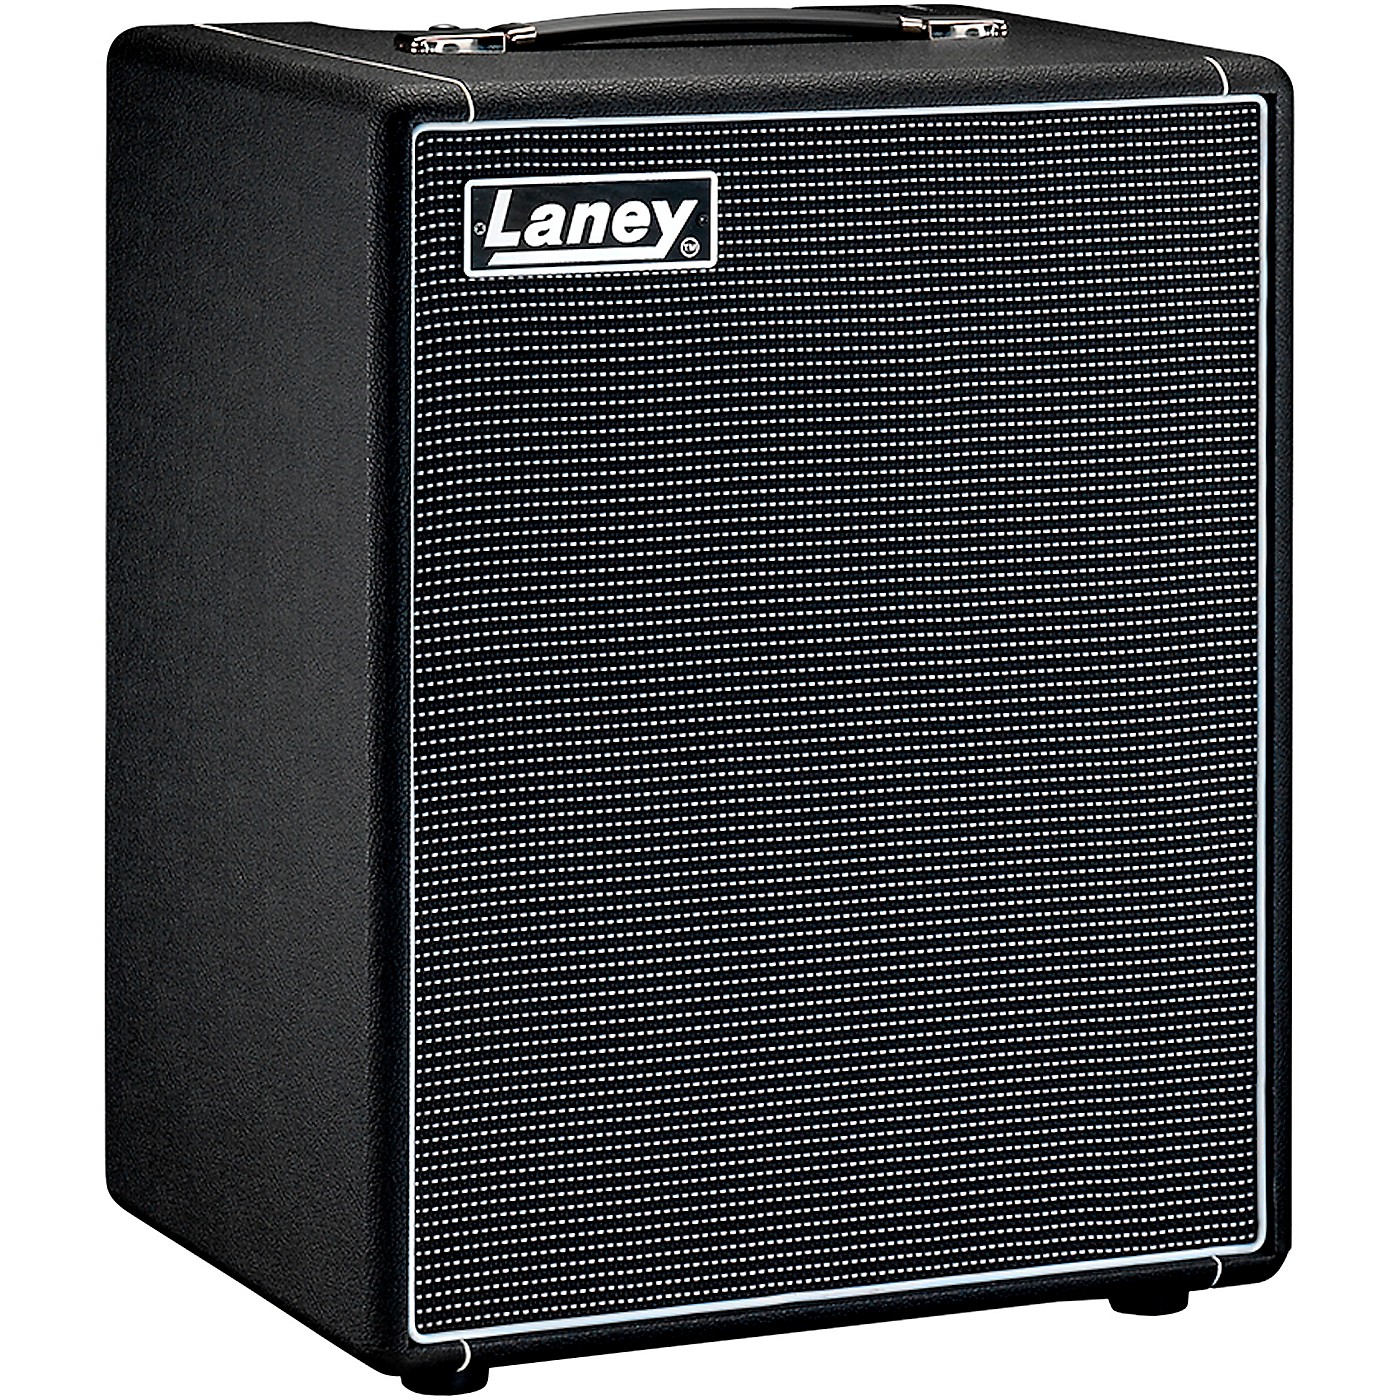 Laney Digbeth DB200-210 200W 2x10 Bass Combo Amp thumbnail